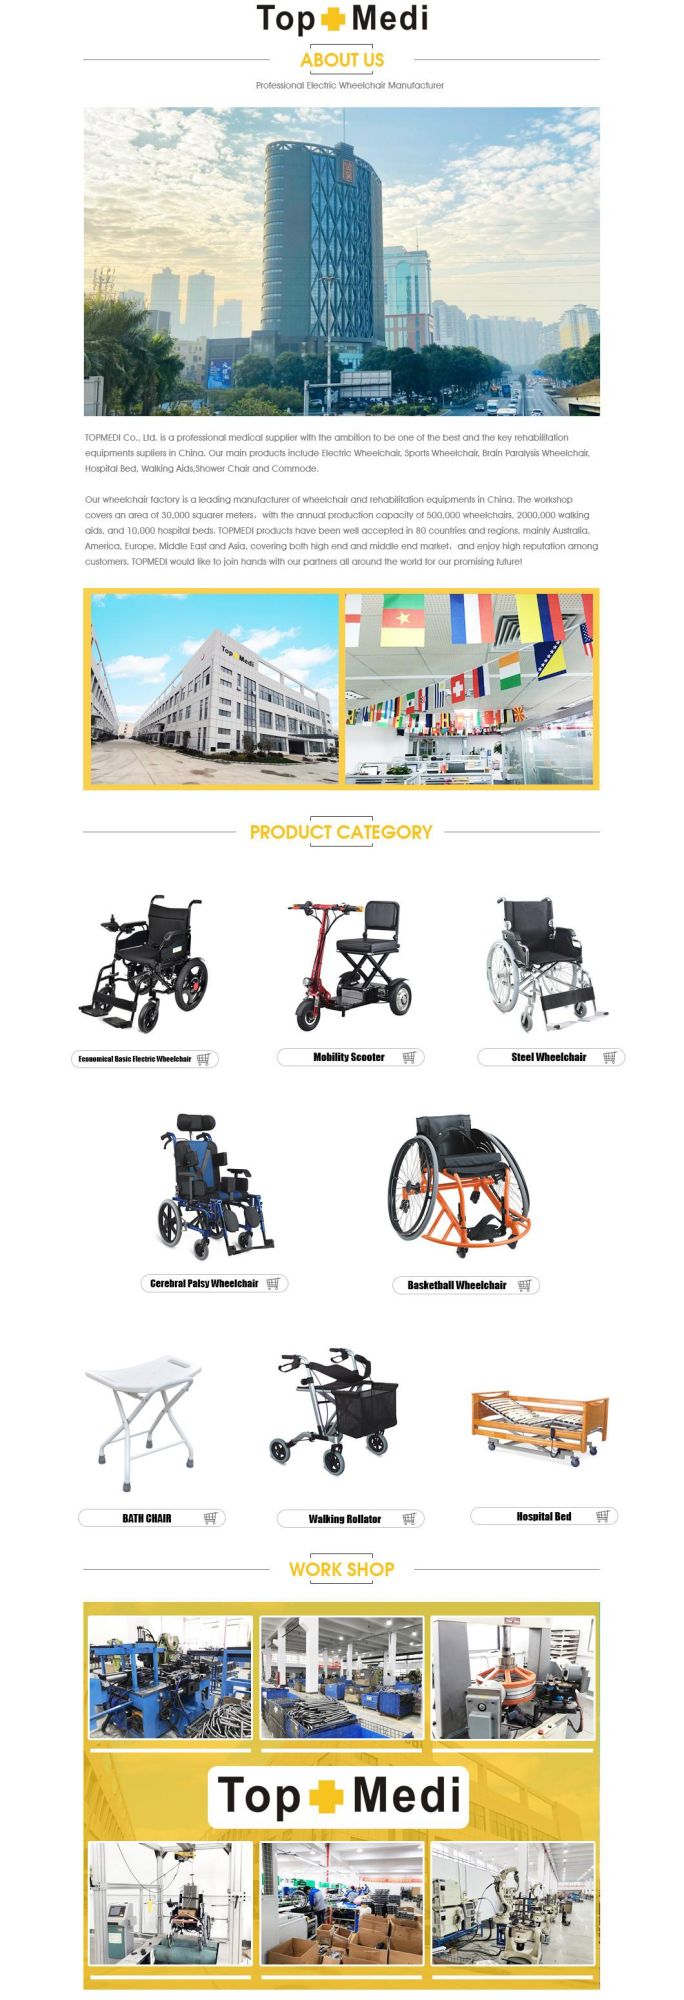 Standard Economical Steel Wheelchair with Flip-up Armrest